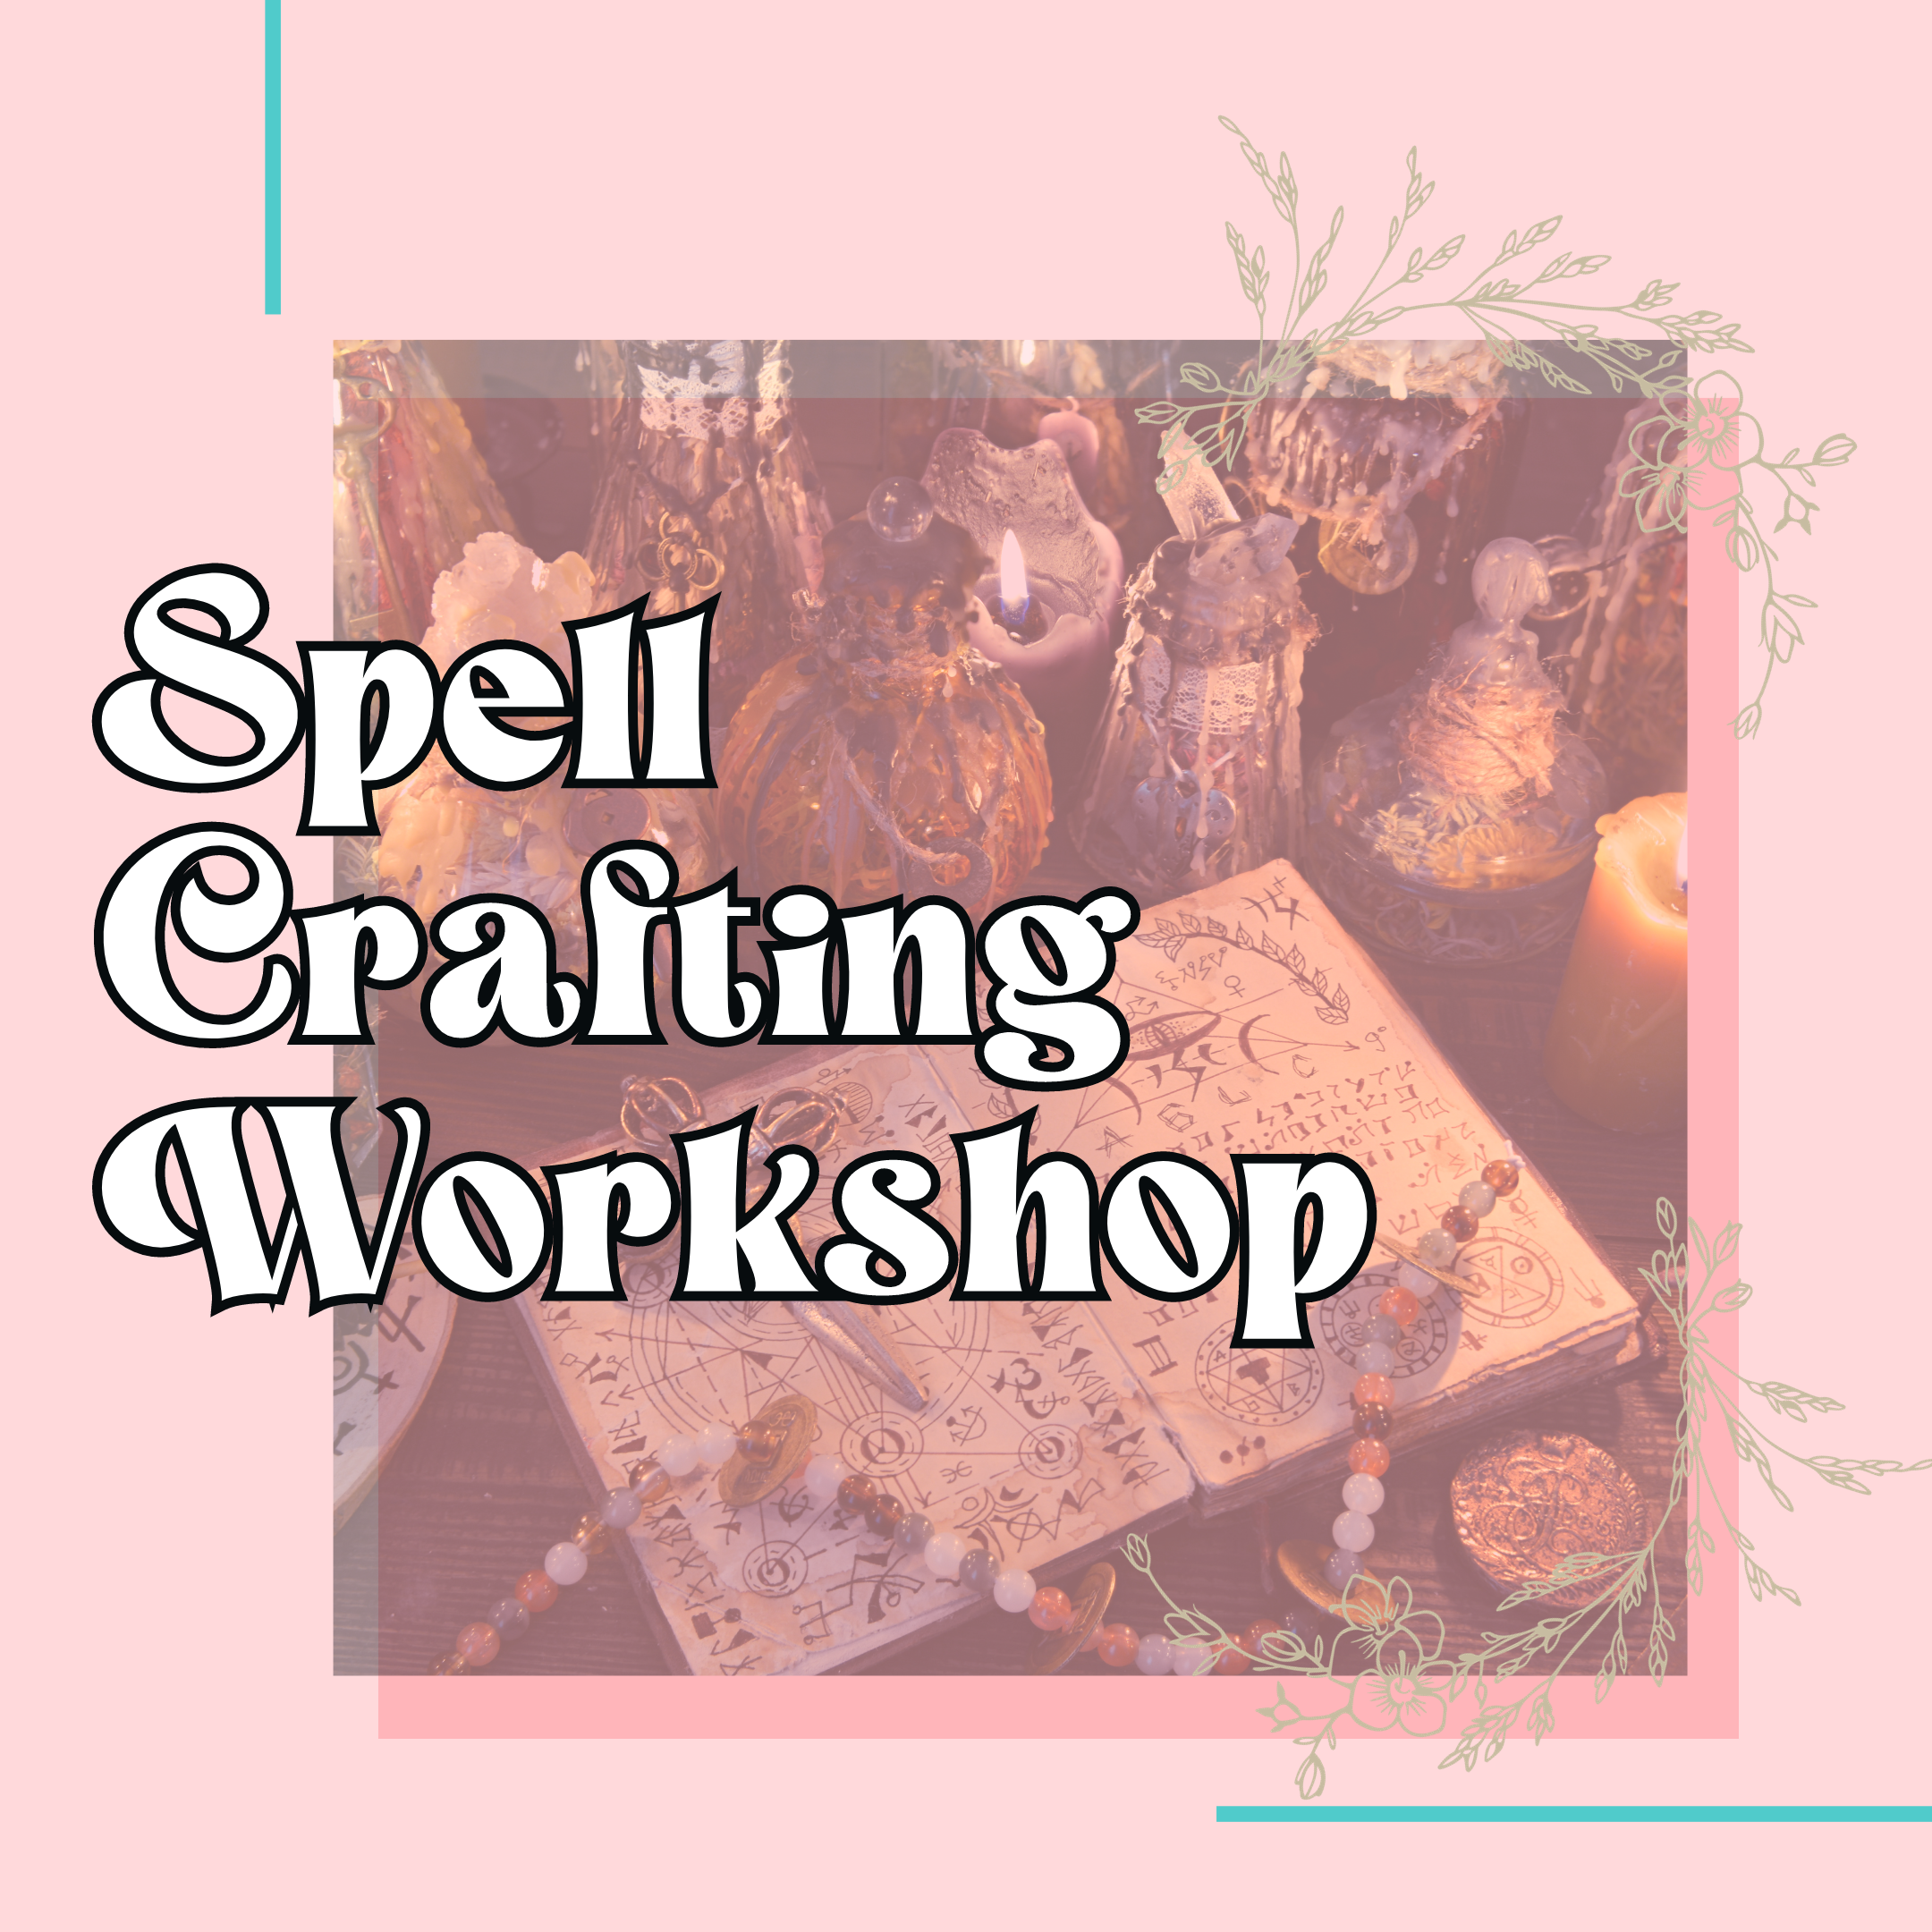 Spell Crafting Workshop